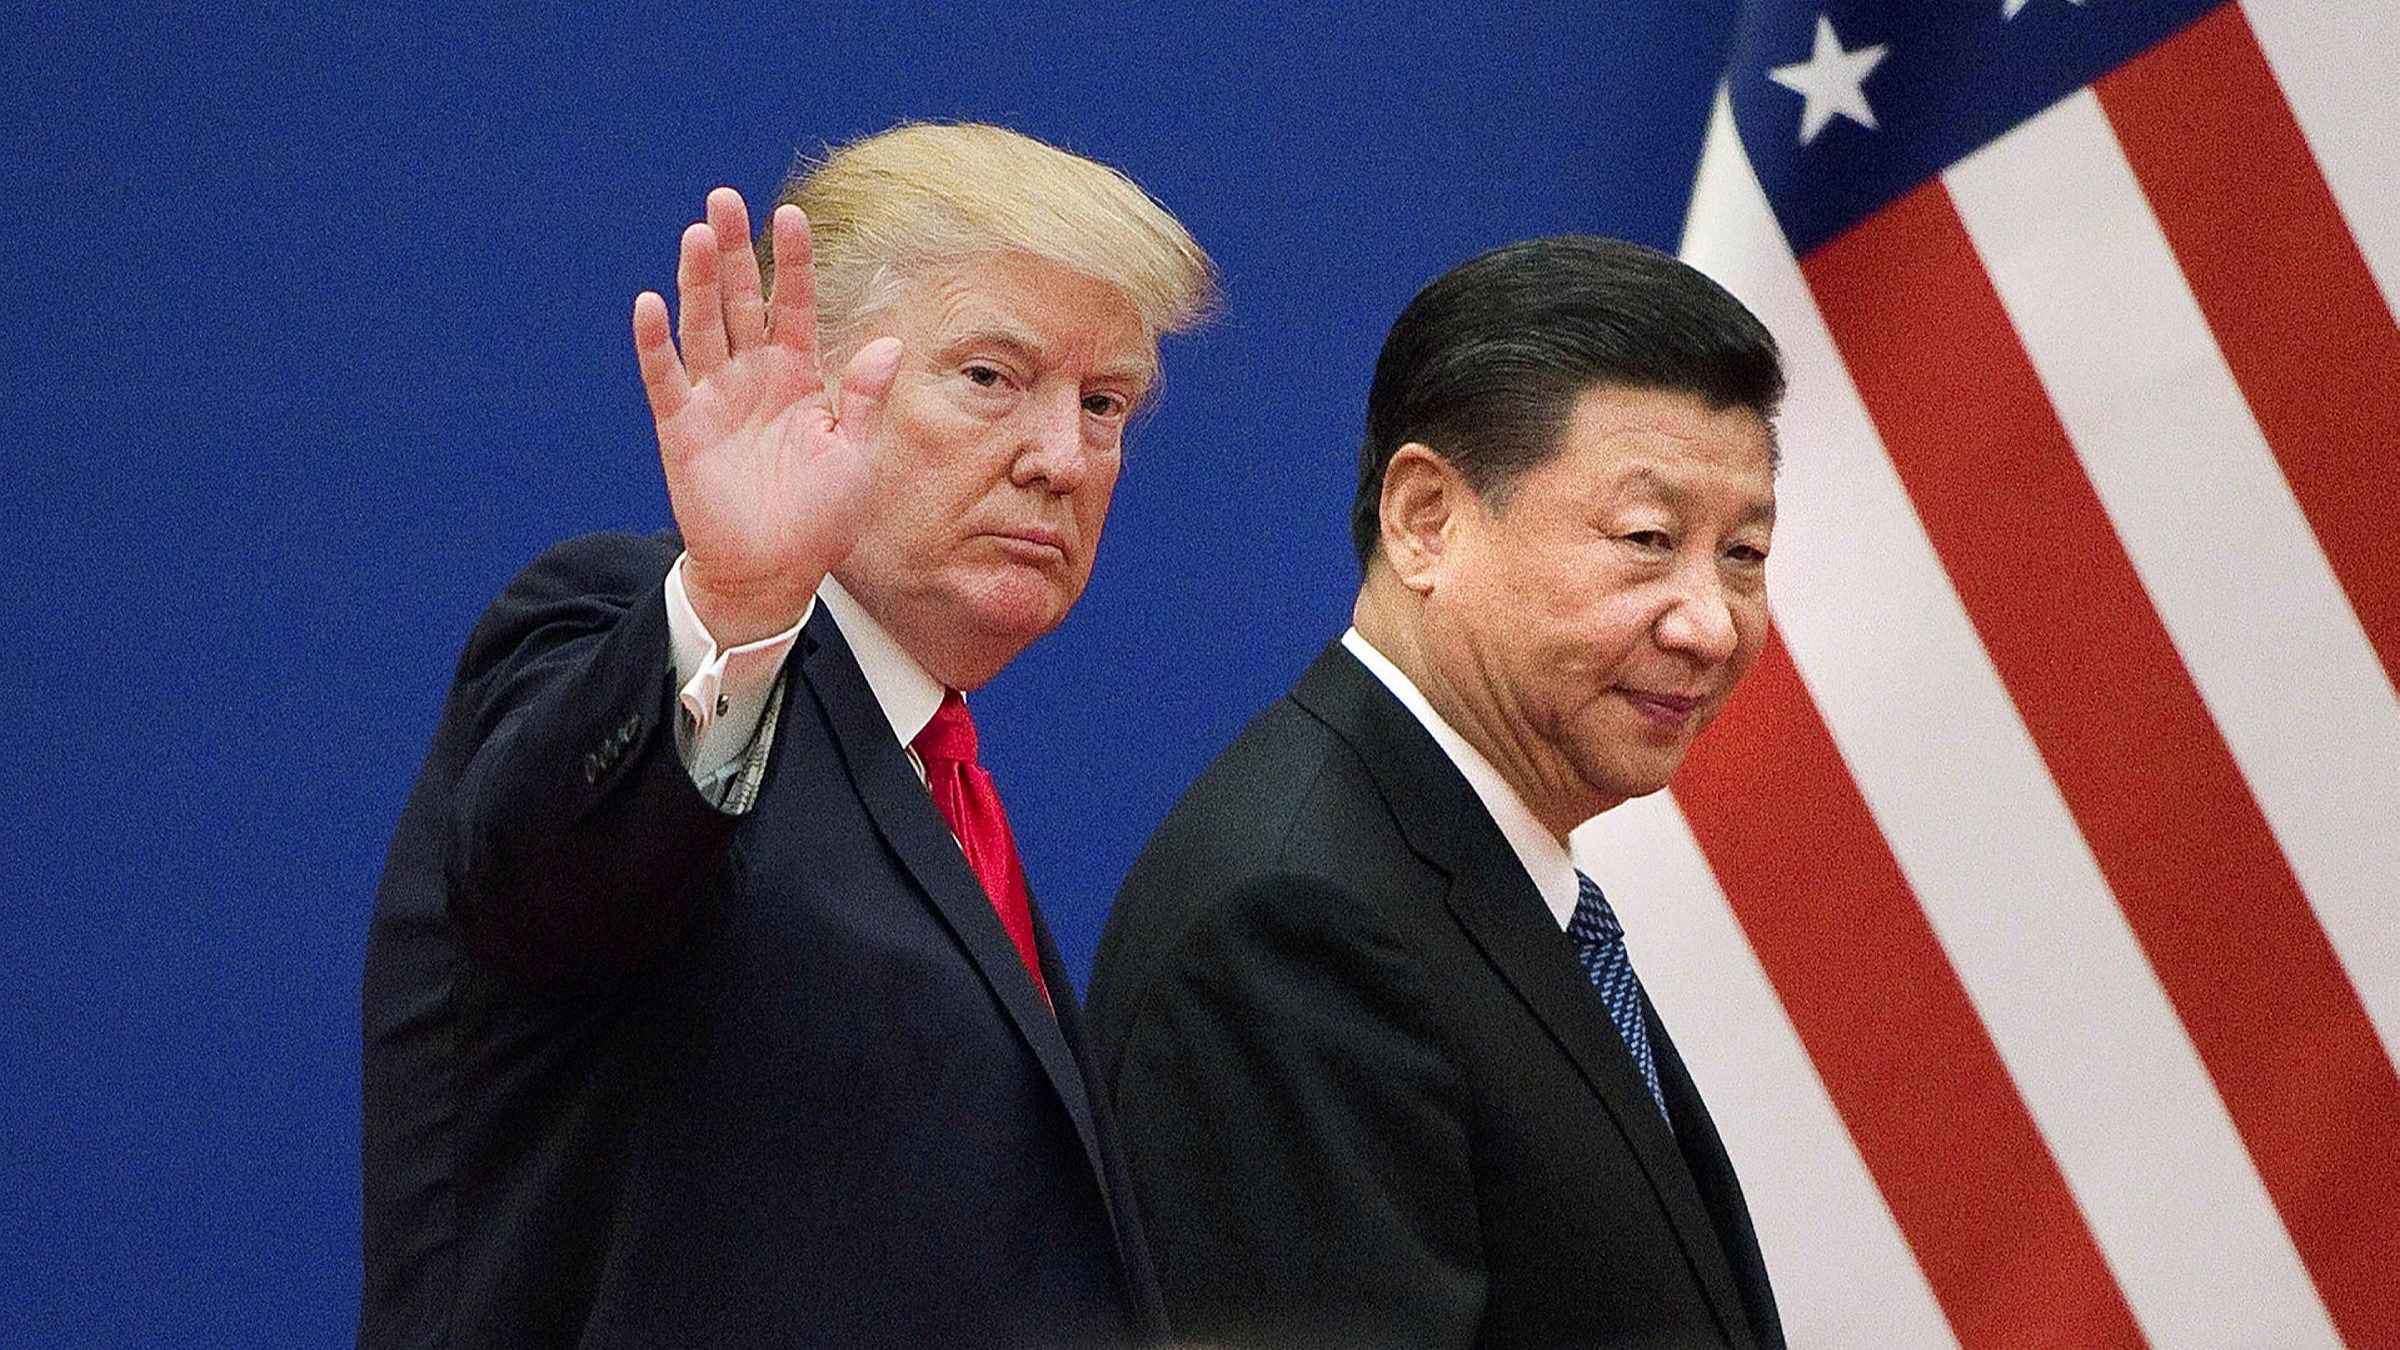 Trump and Xi speak after US and China trade barbs on coronavirus ...